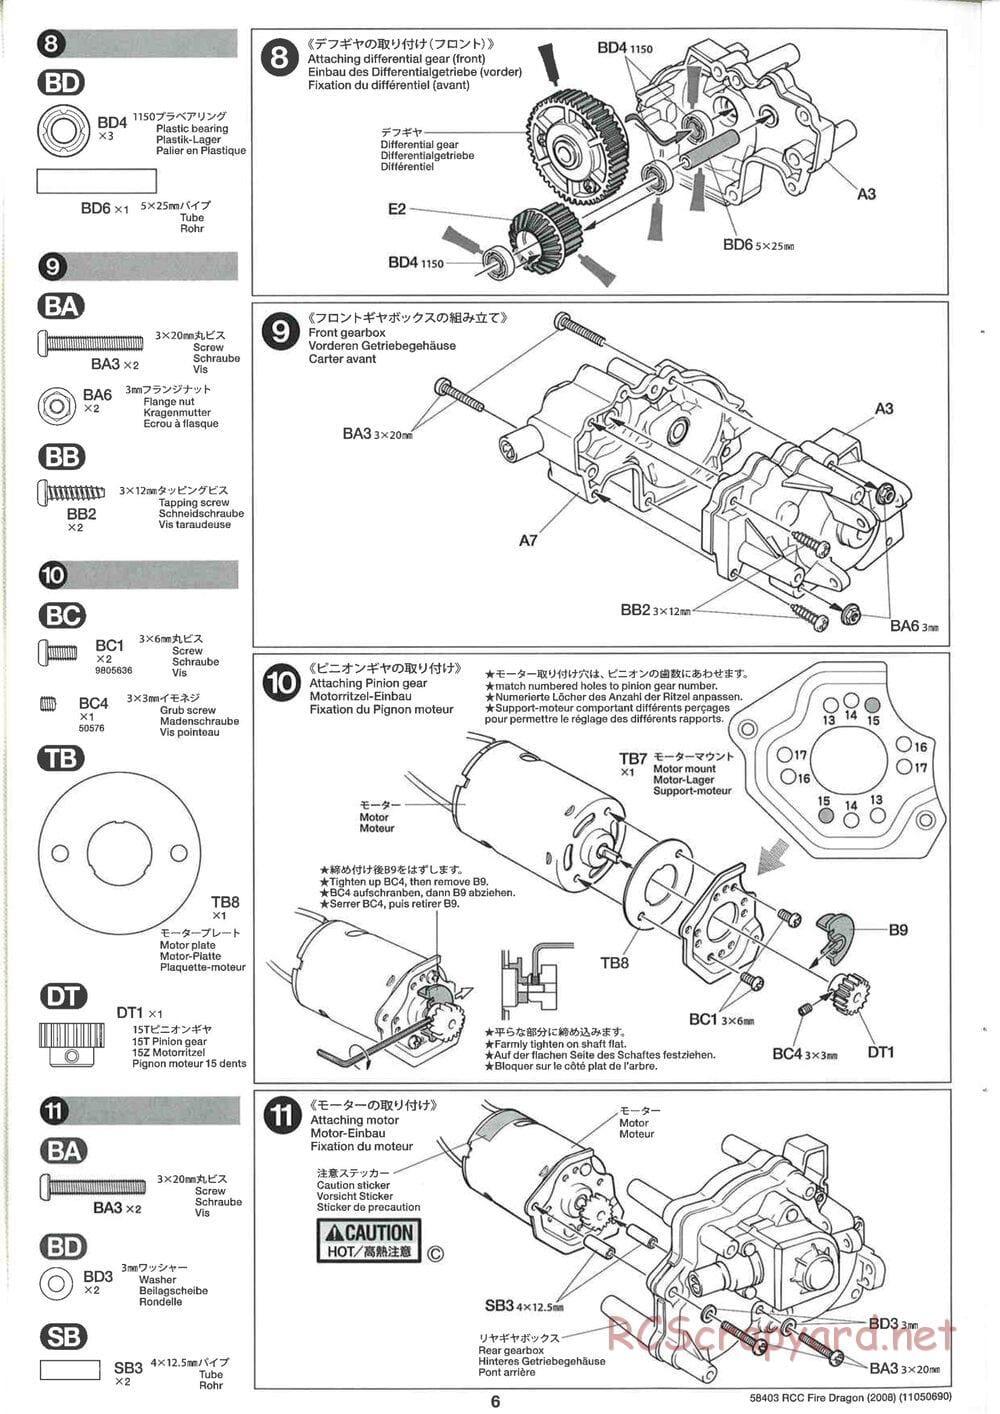 Tamiya - Fire Dragon 2008 - TS2 Chassis - Manual - Page 6